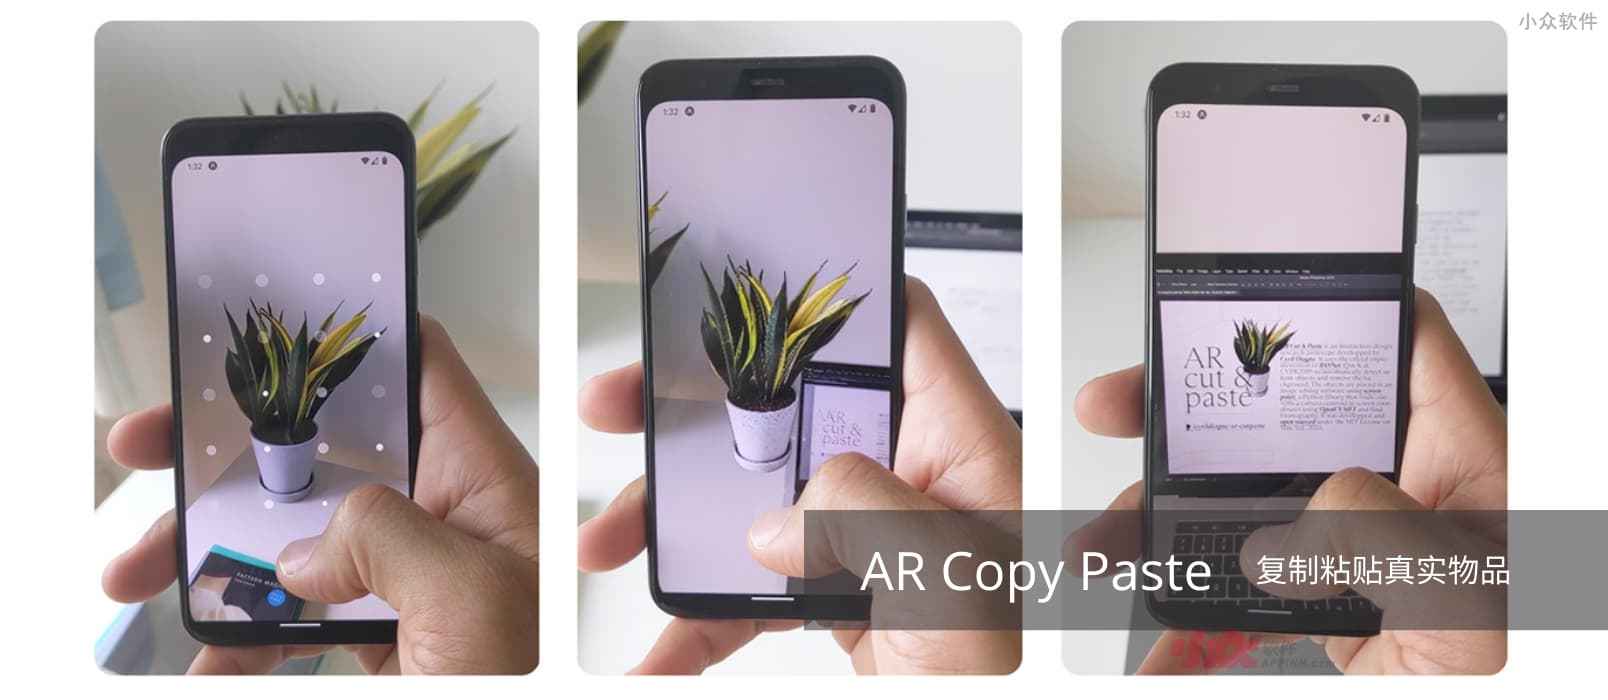 AR Copy Paste – 用 AR 复制粘贴真实物品到电脑中，支持 iPhone 与 Android